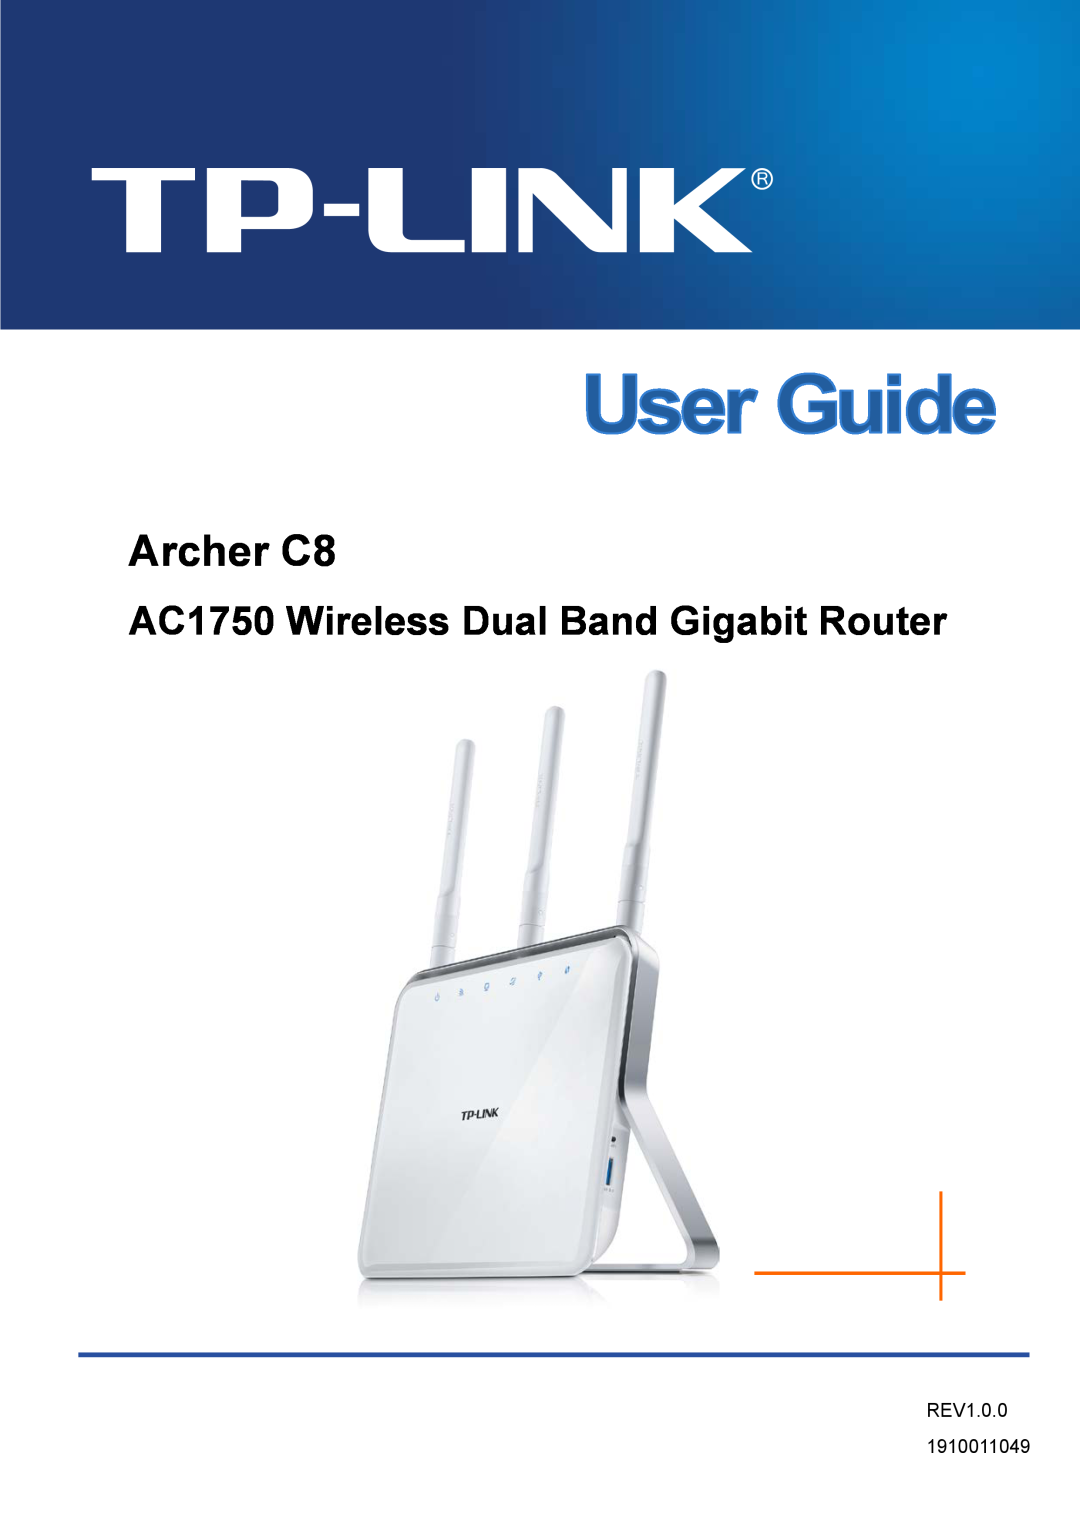 TP-Link manual AC1750 Wireless Dual Band Gigabit Router, Archer C8 